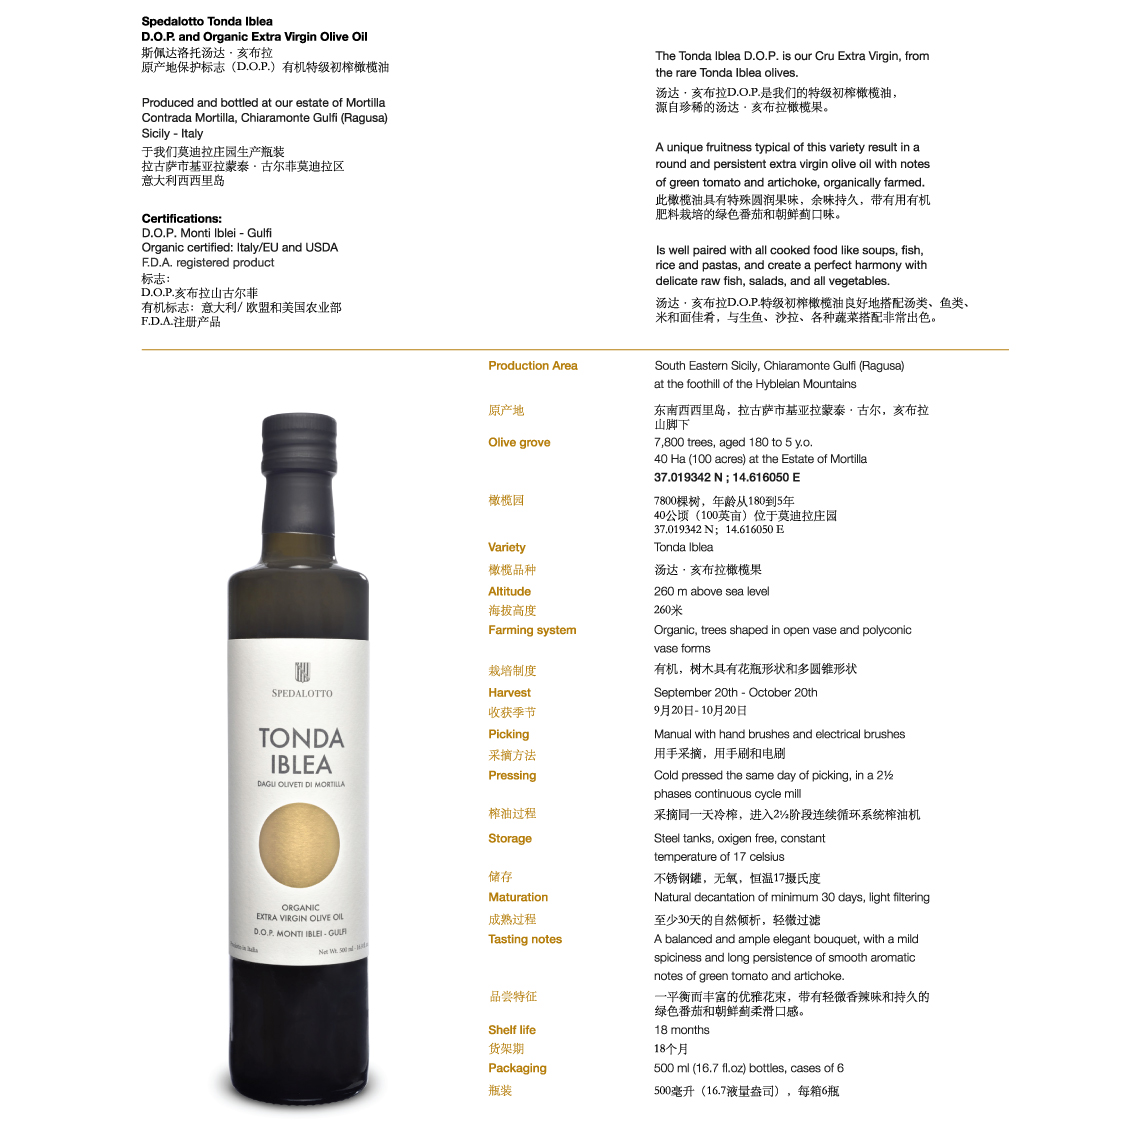 Spedalotto Tonda Iblea ; Organic Extra Virgin Olive Oil, premium product, estate produced and bottled